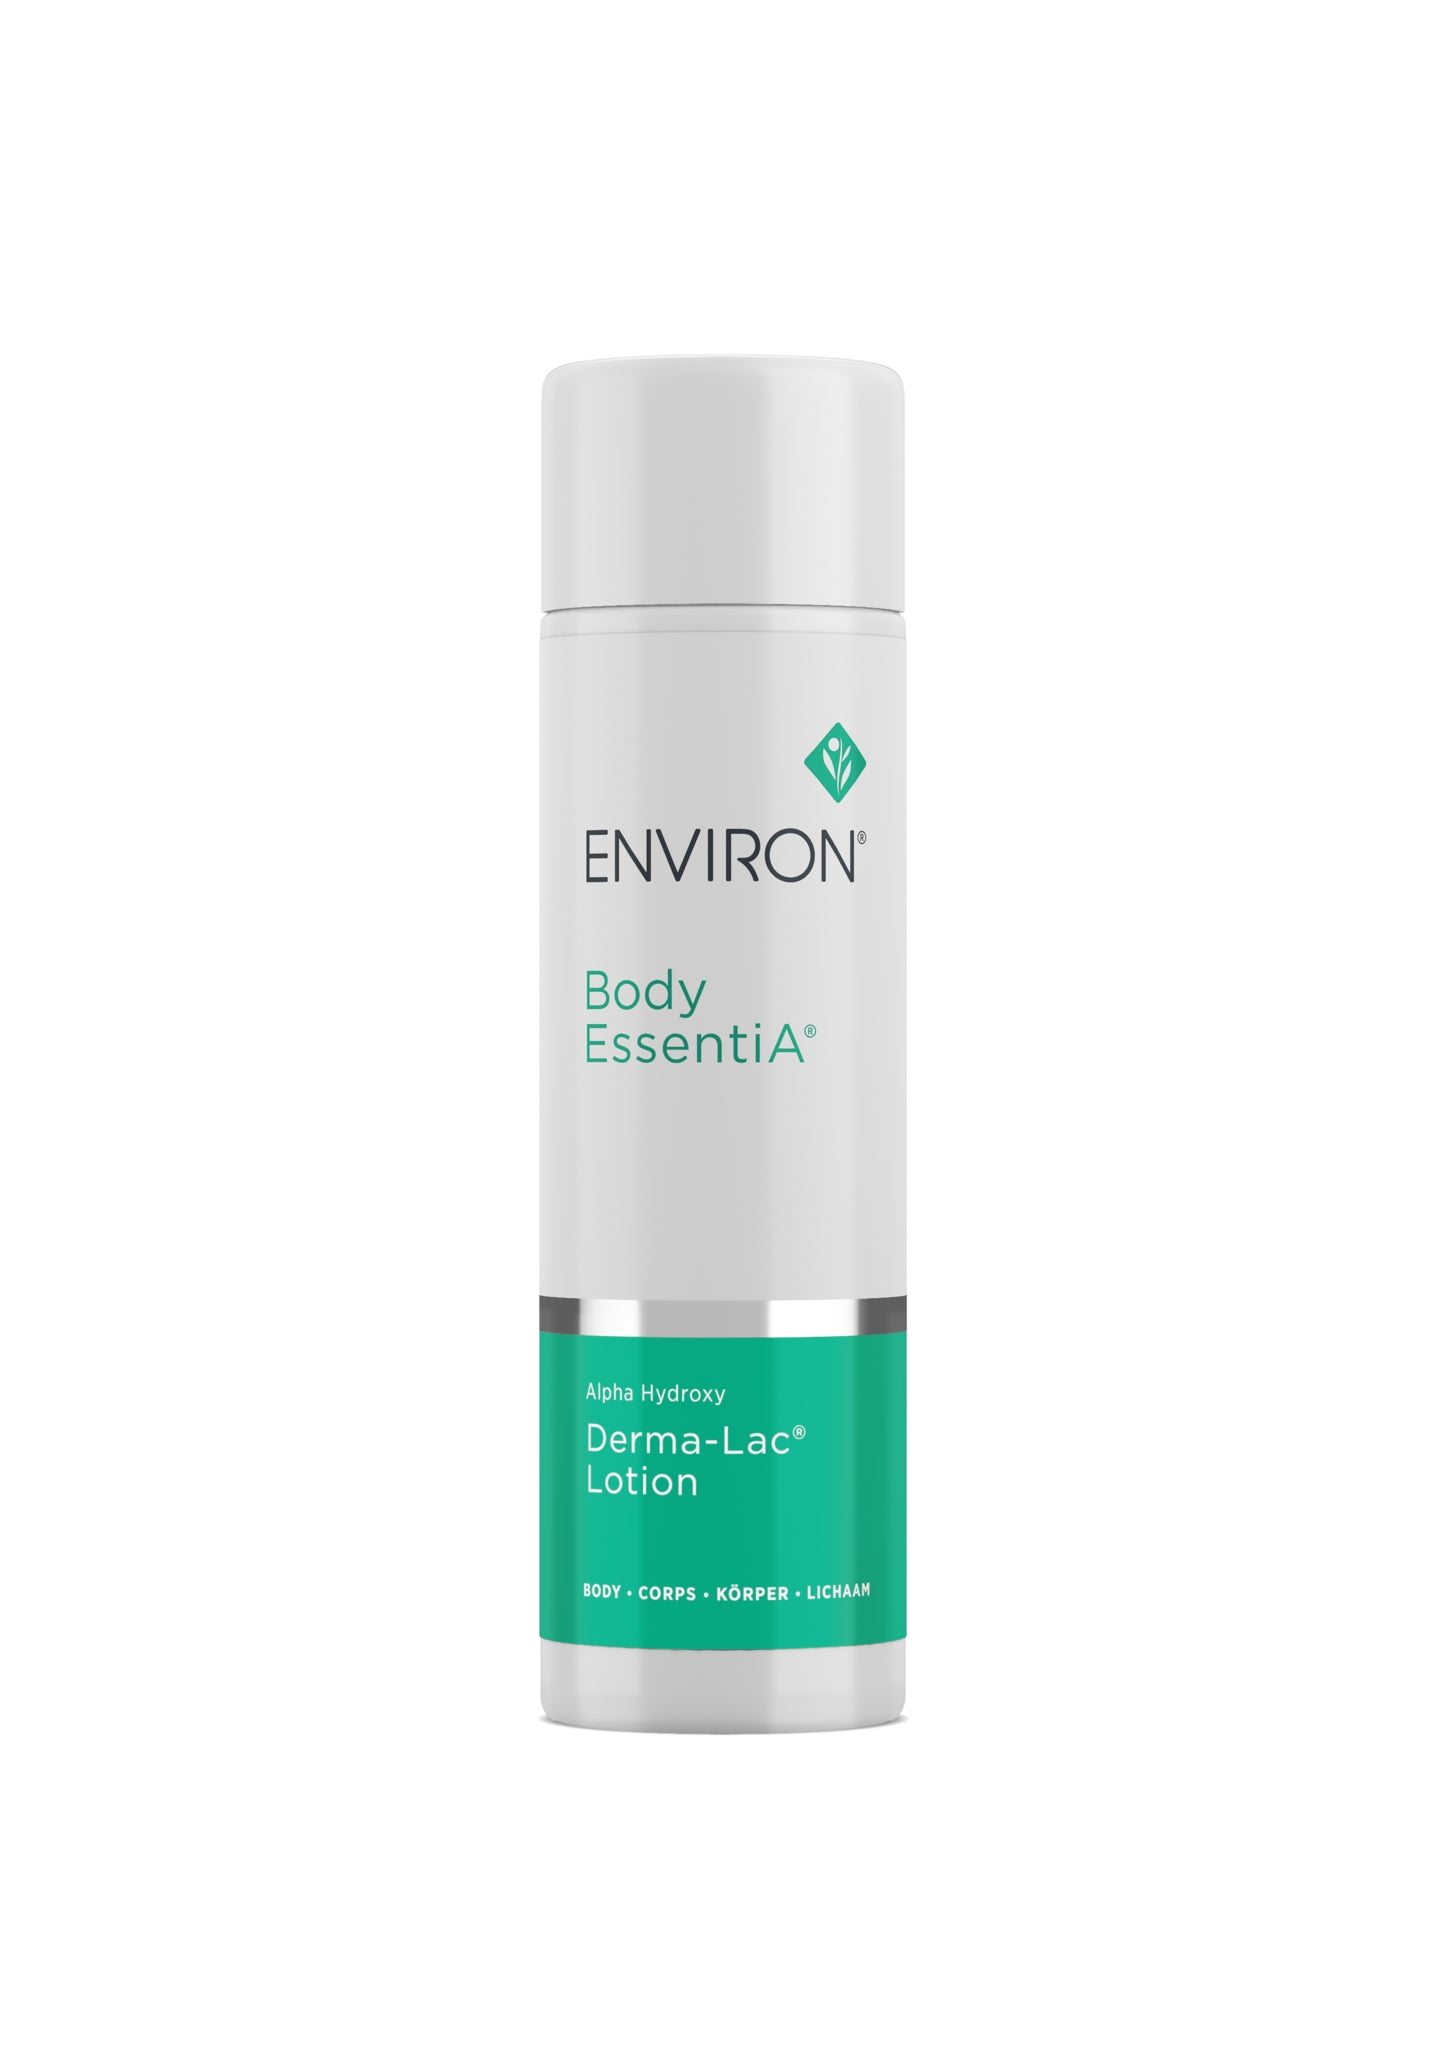 Environ Body EssentiA range - Derma-Lac Lotion